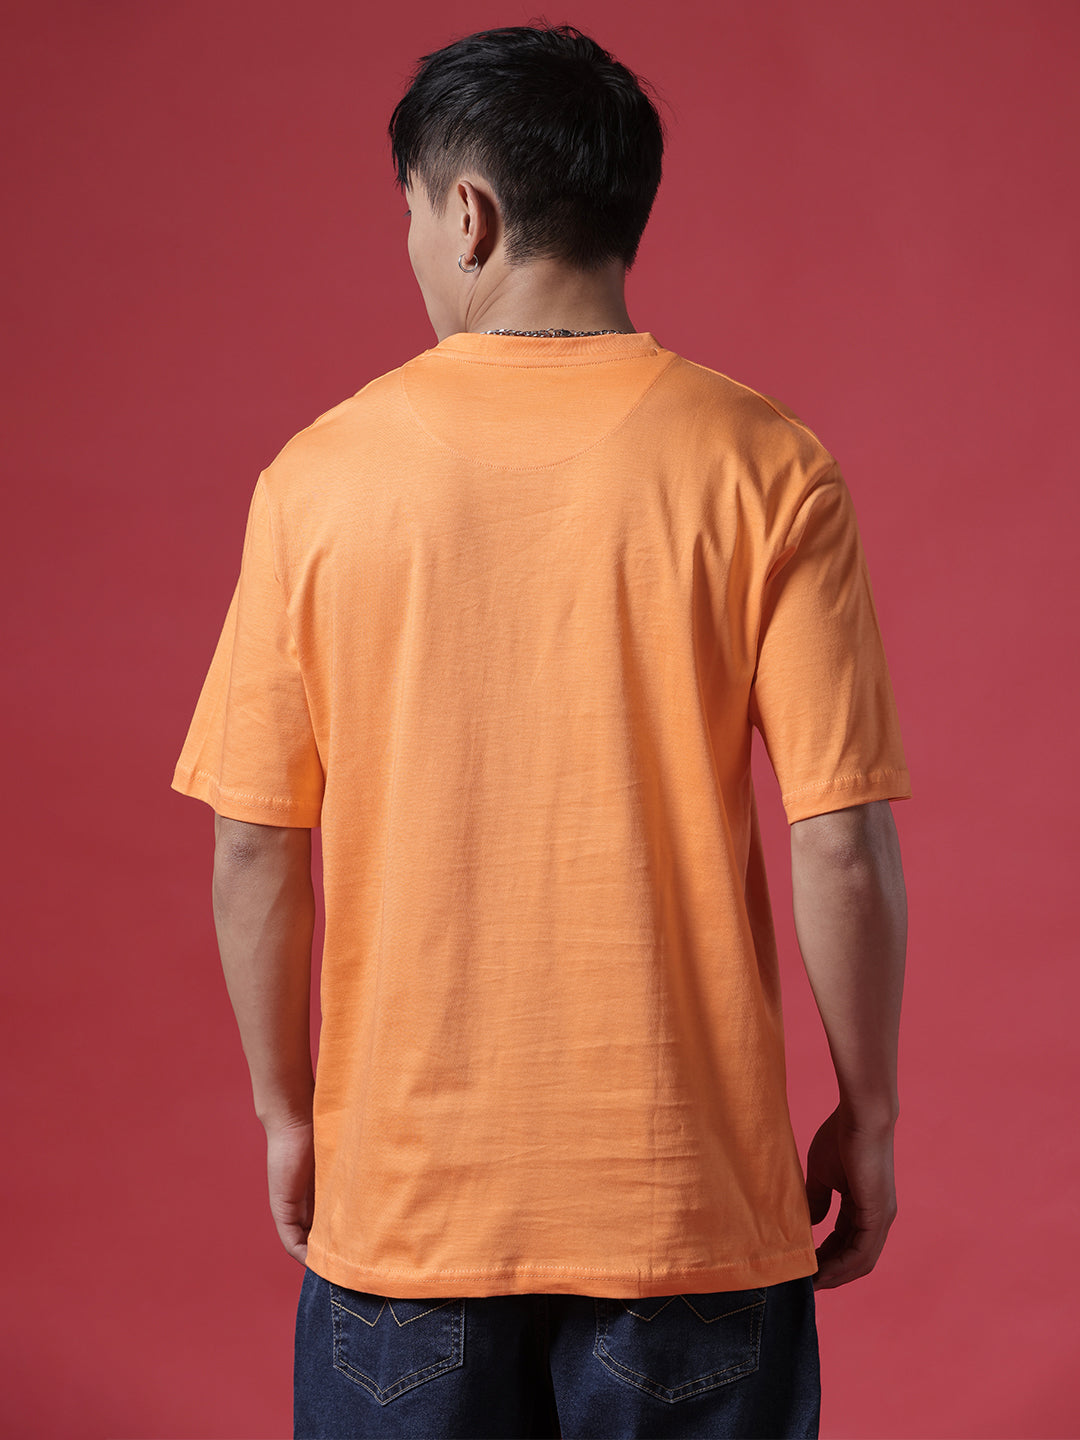 Brightest Printed Orange T-Shirt